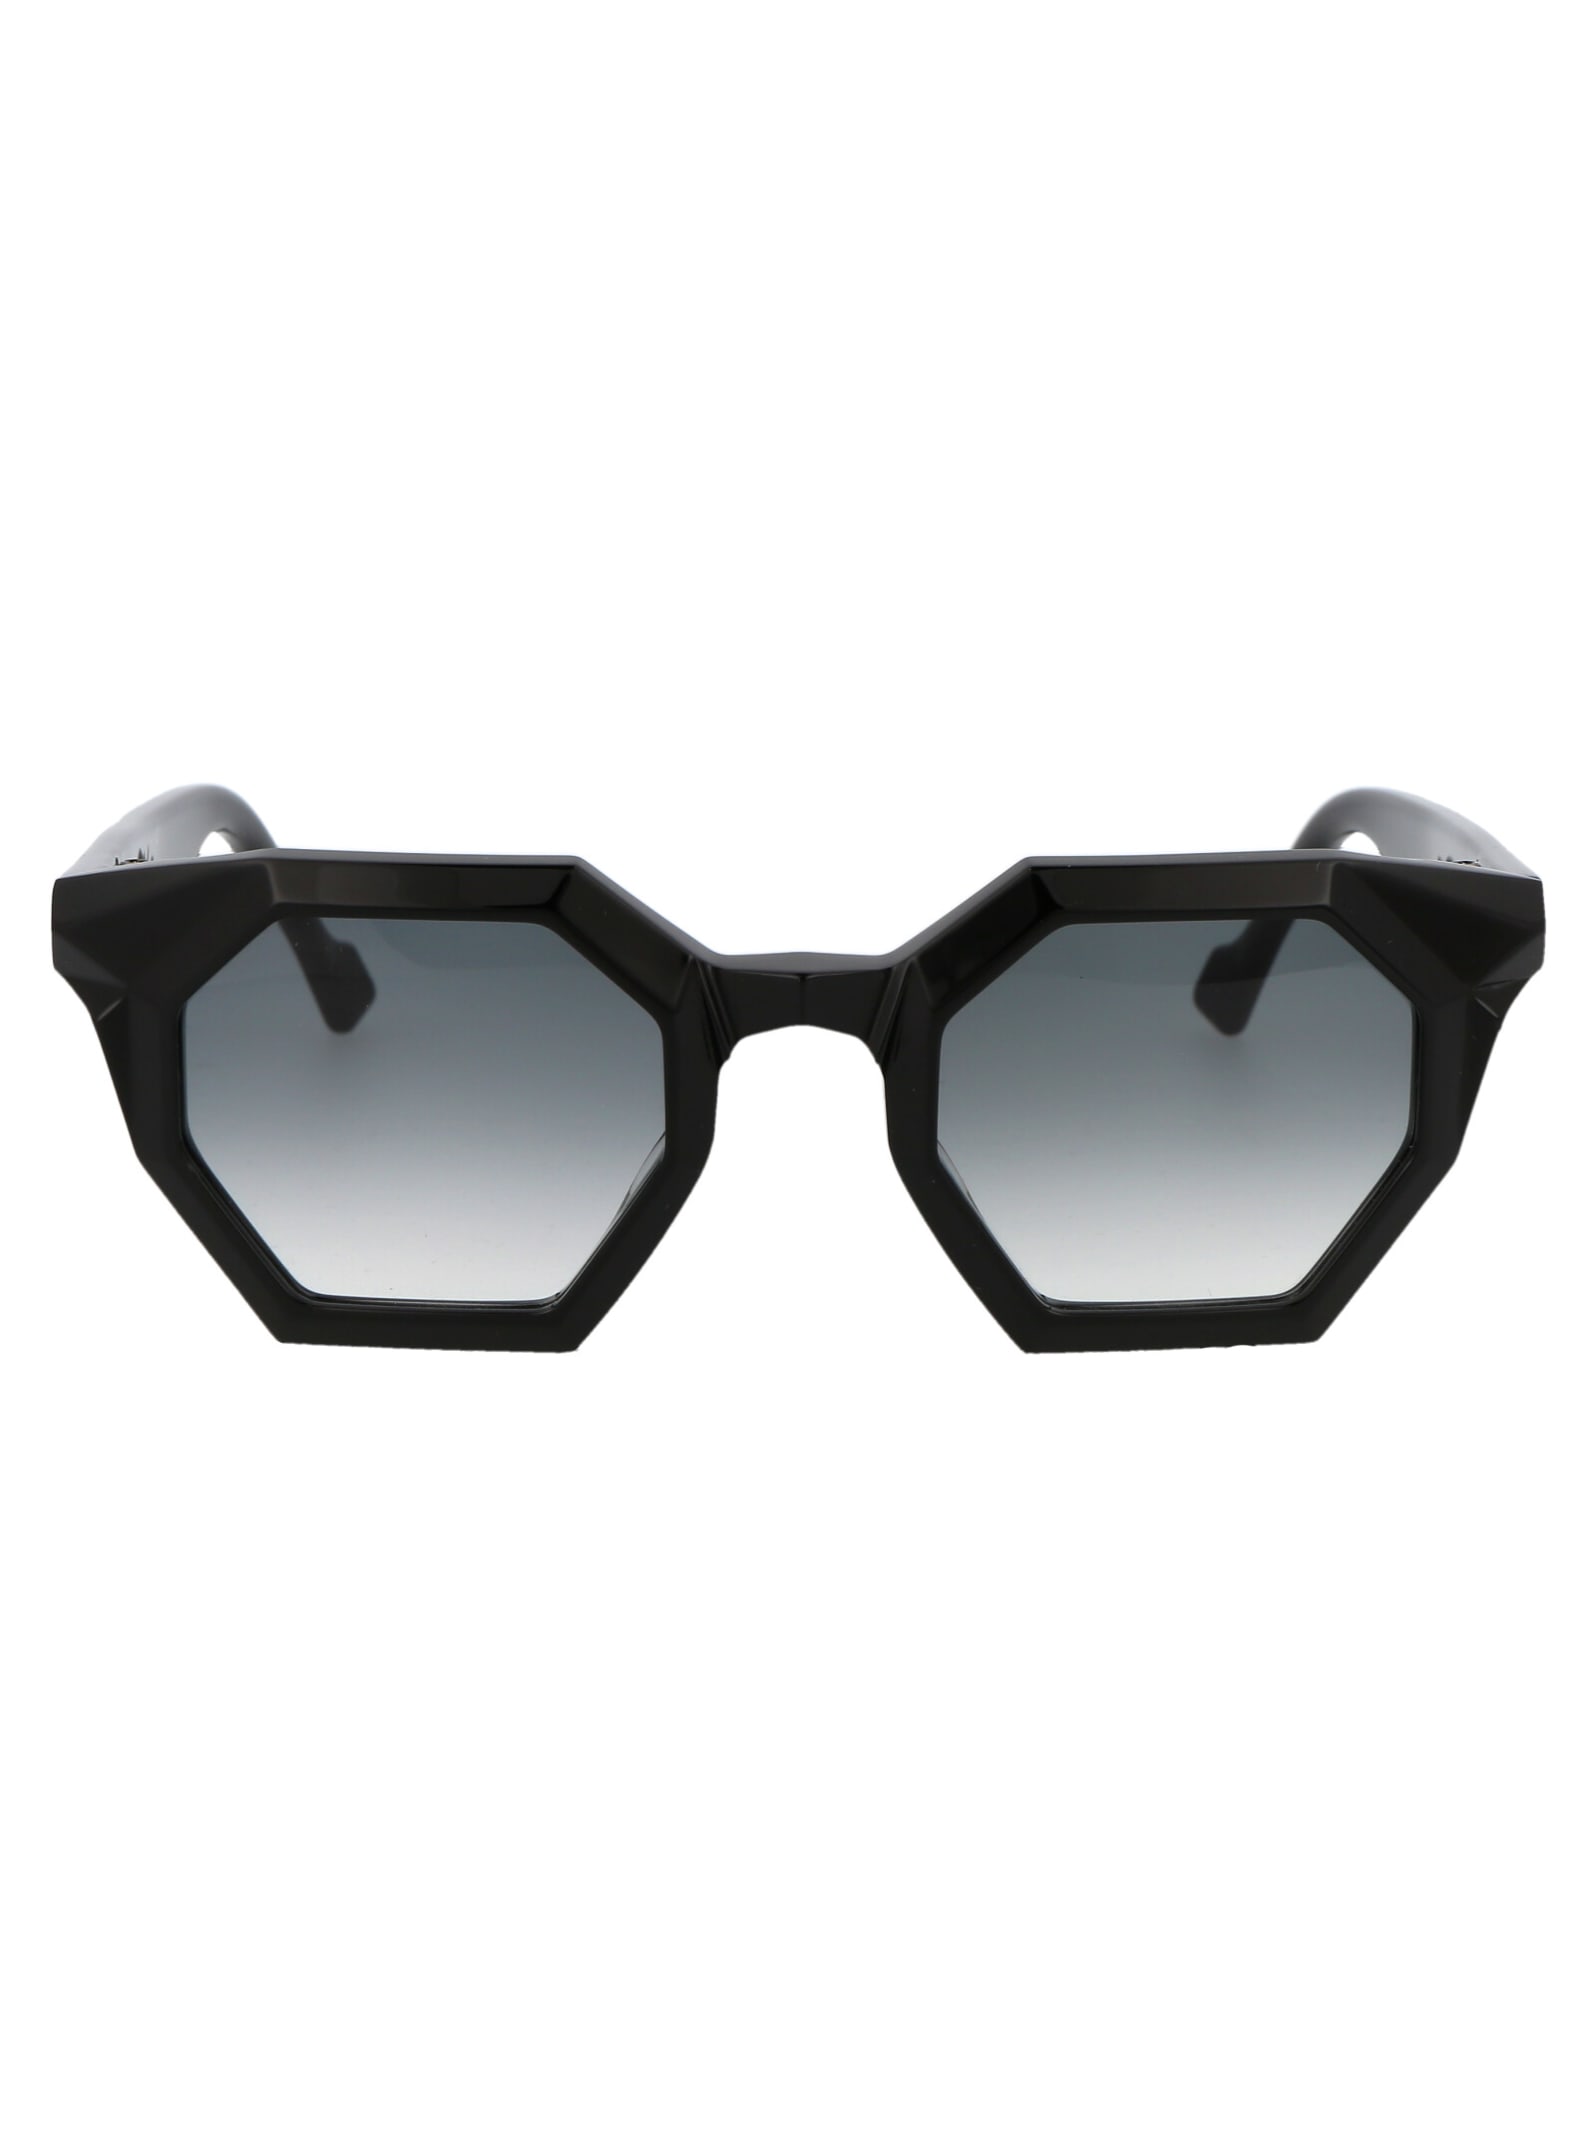 Yohji Yamamoto Slook 013 Sunglasses